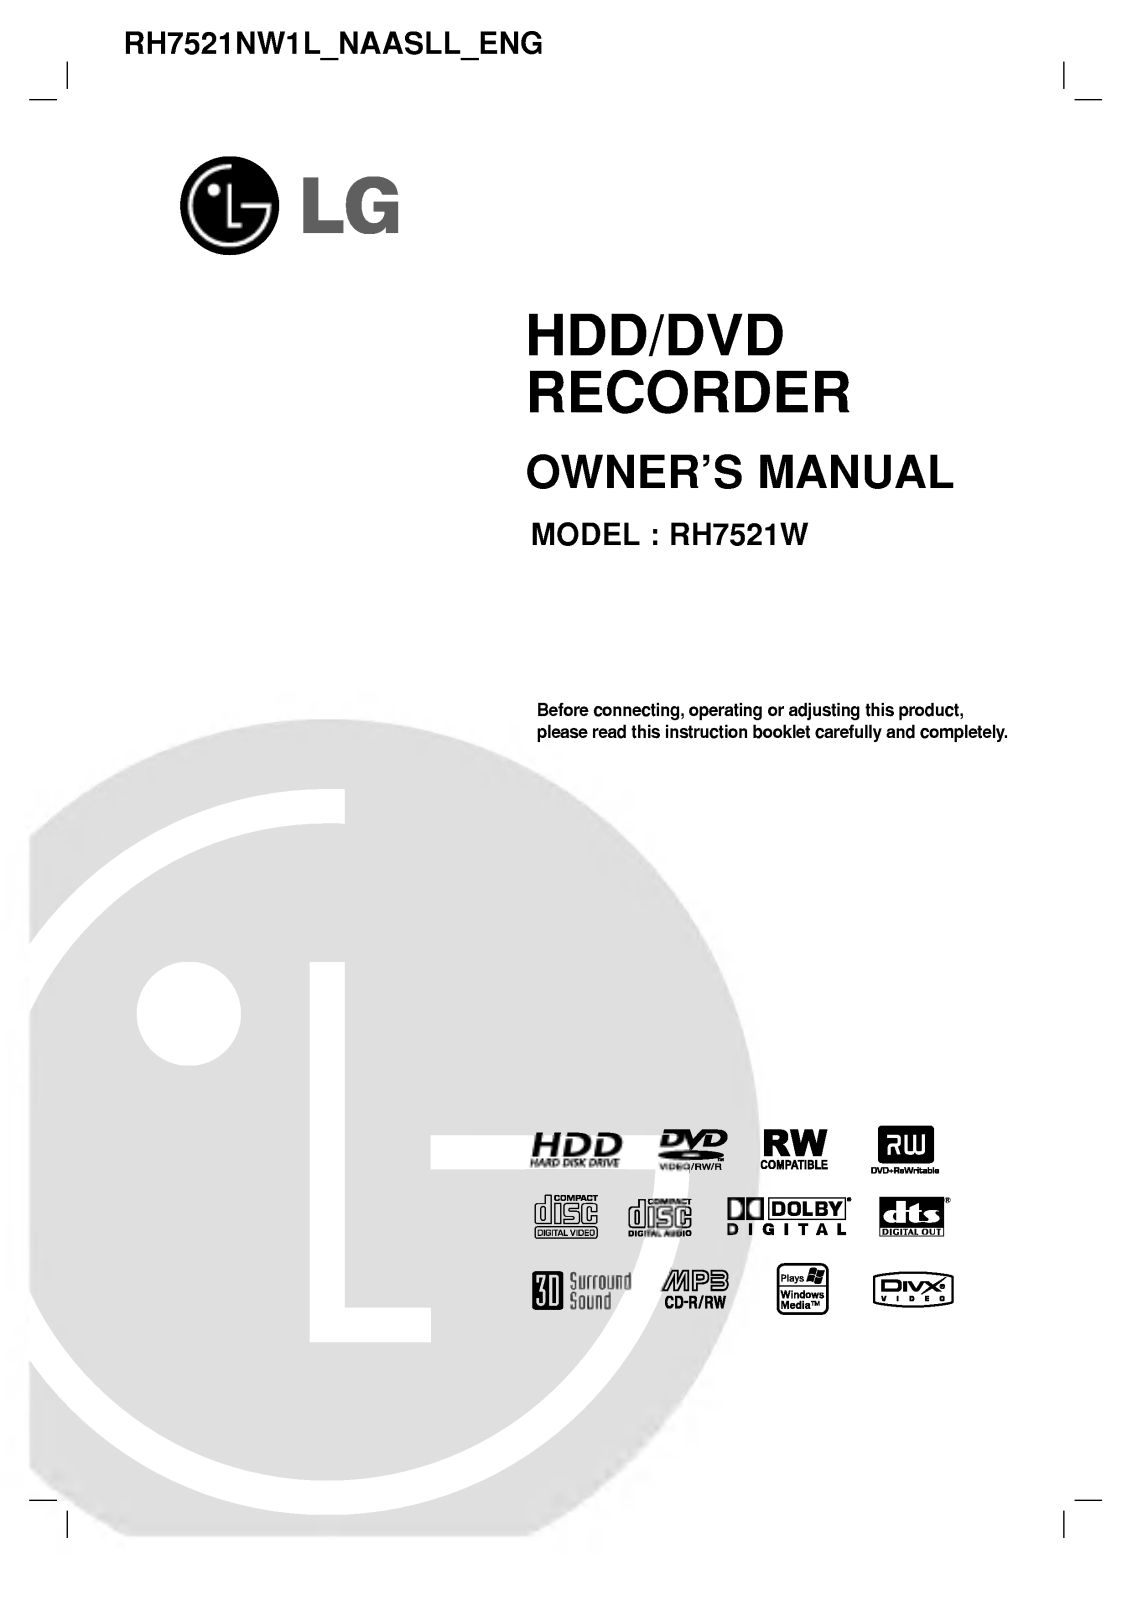 LG RH7521NW1L Owner’s Manual